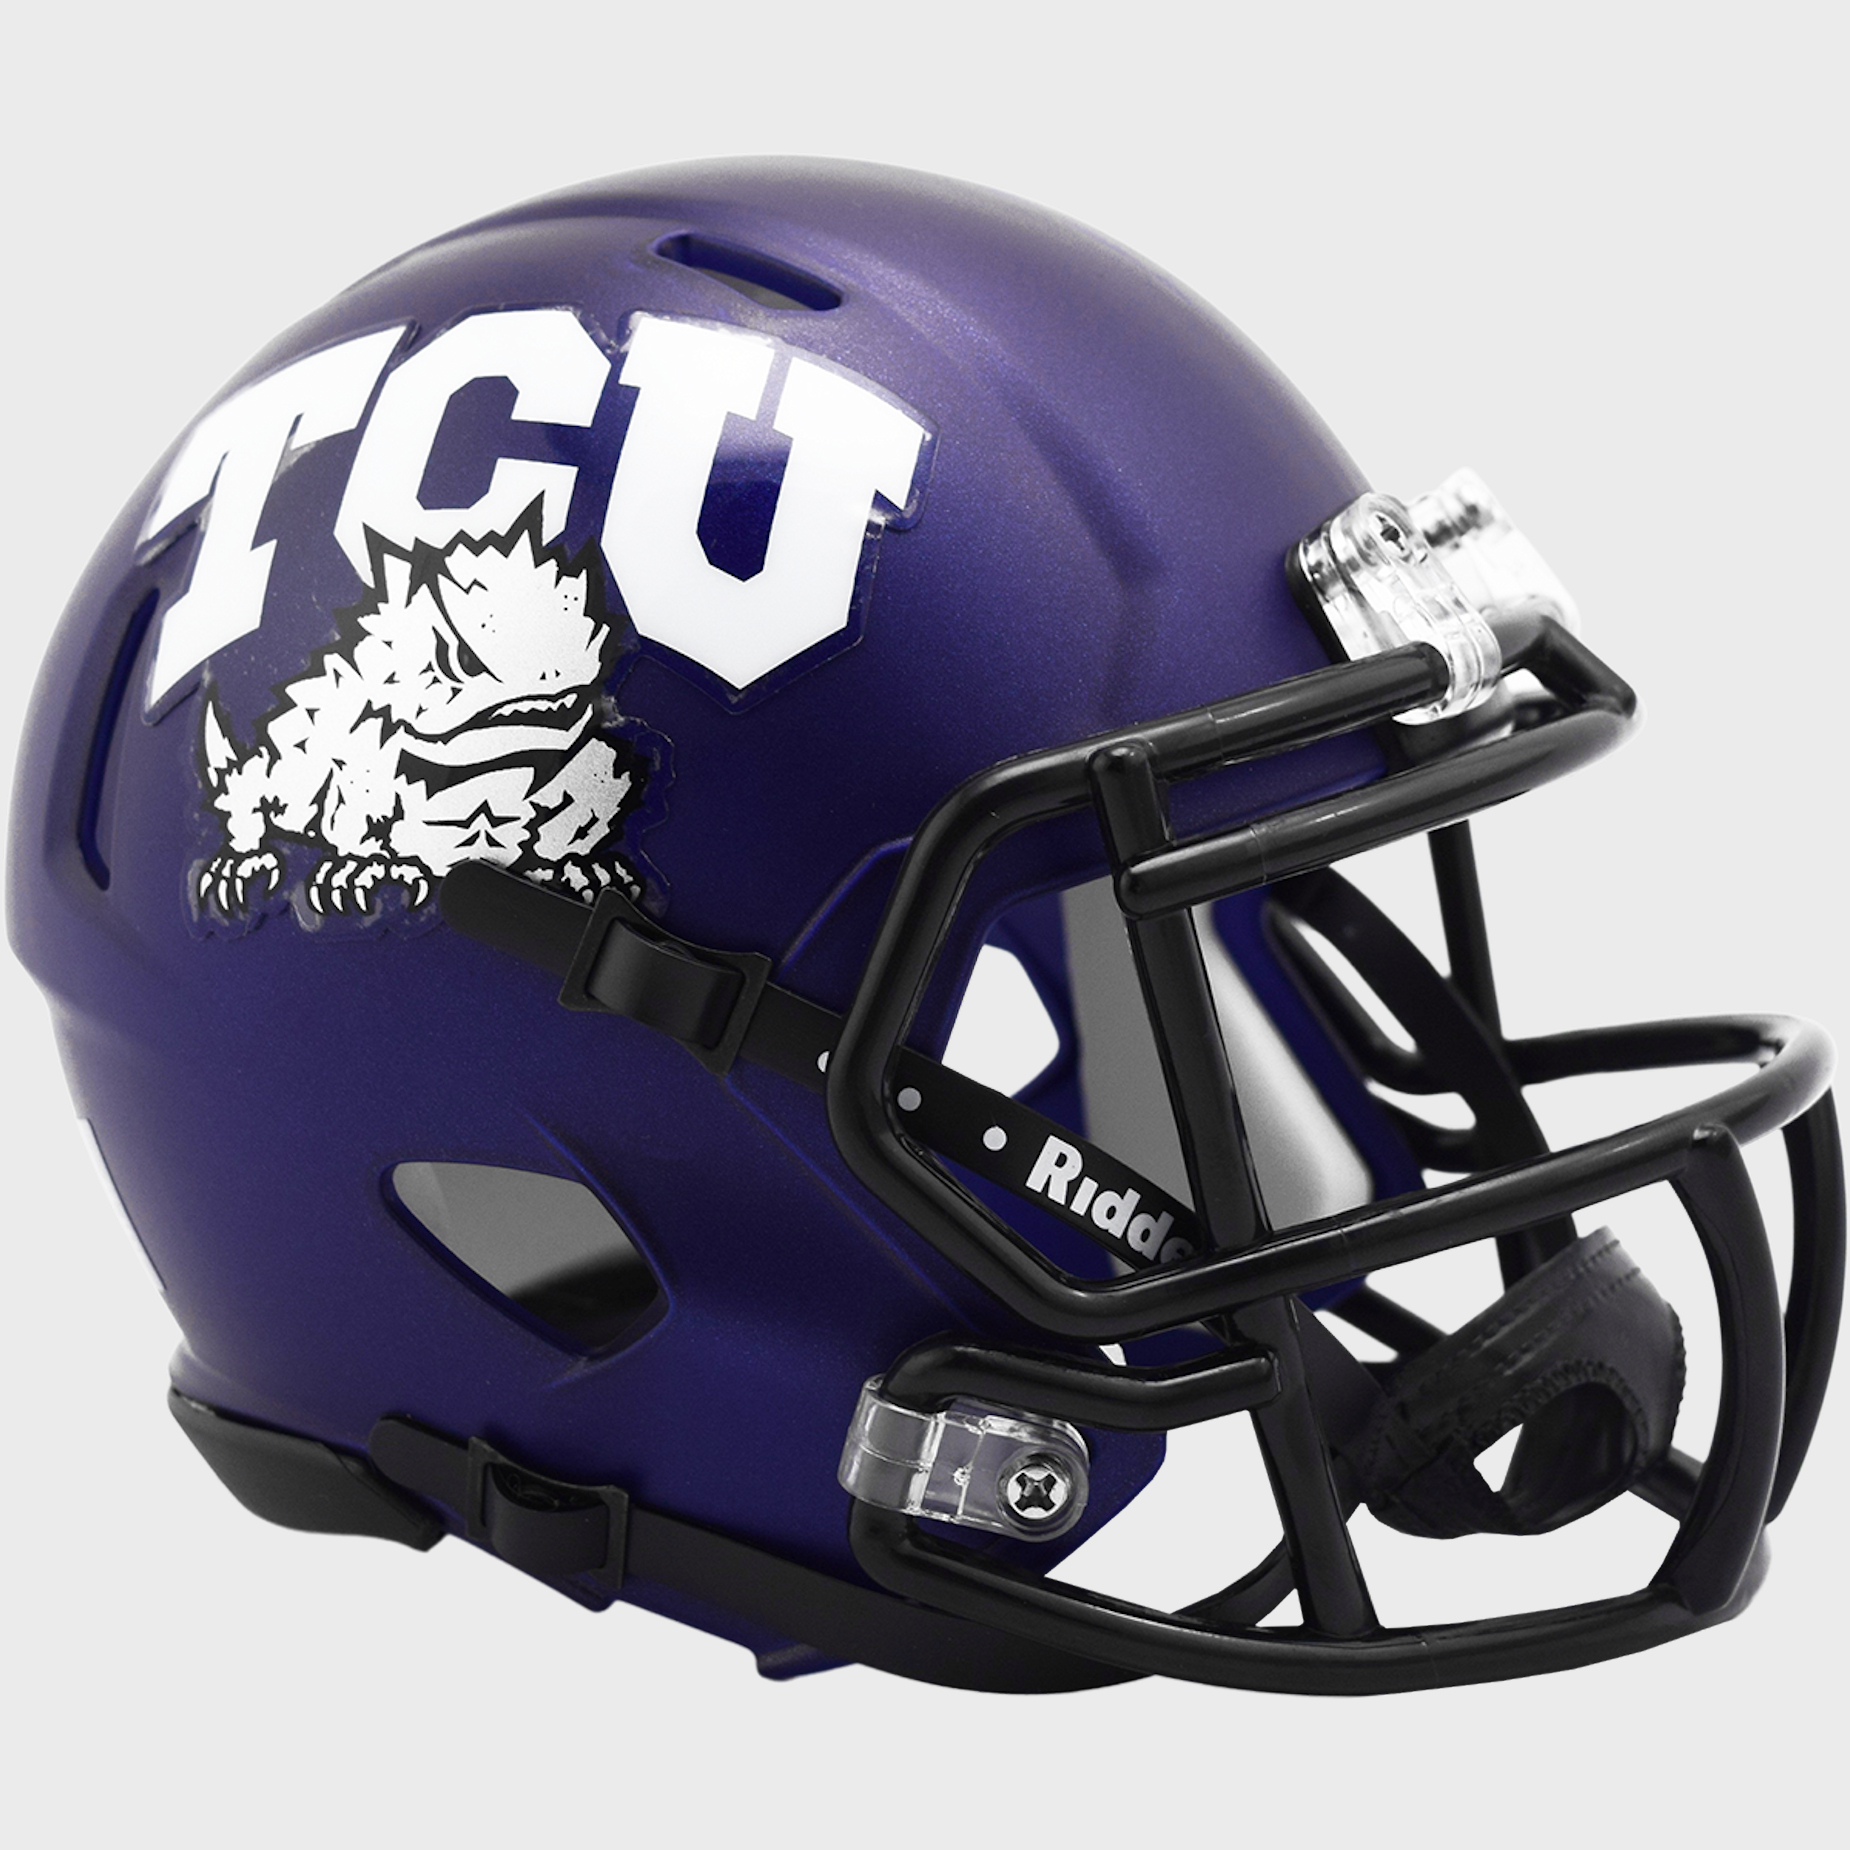 TCU Horned Frogs mini helmet